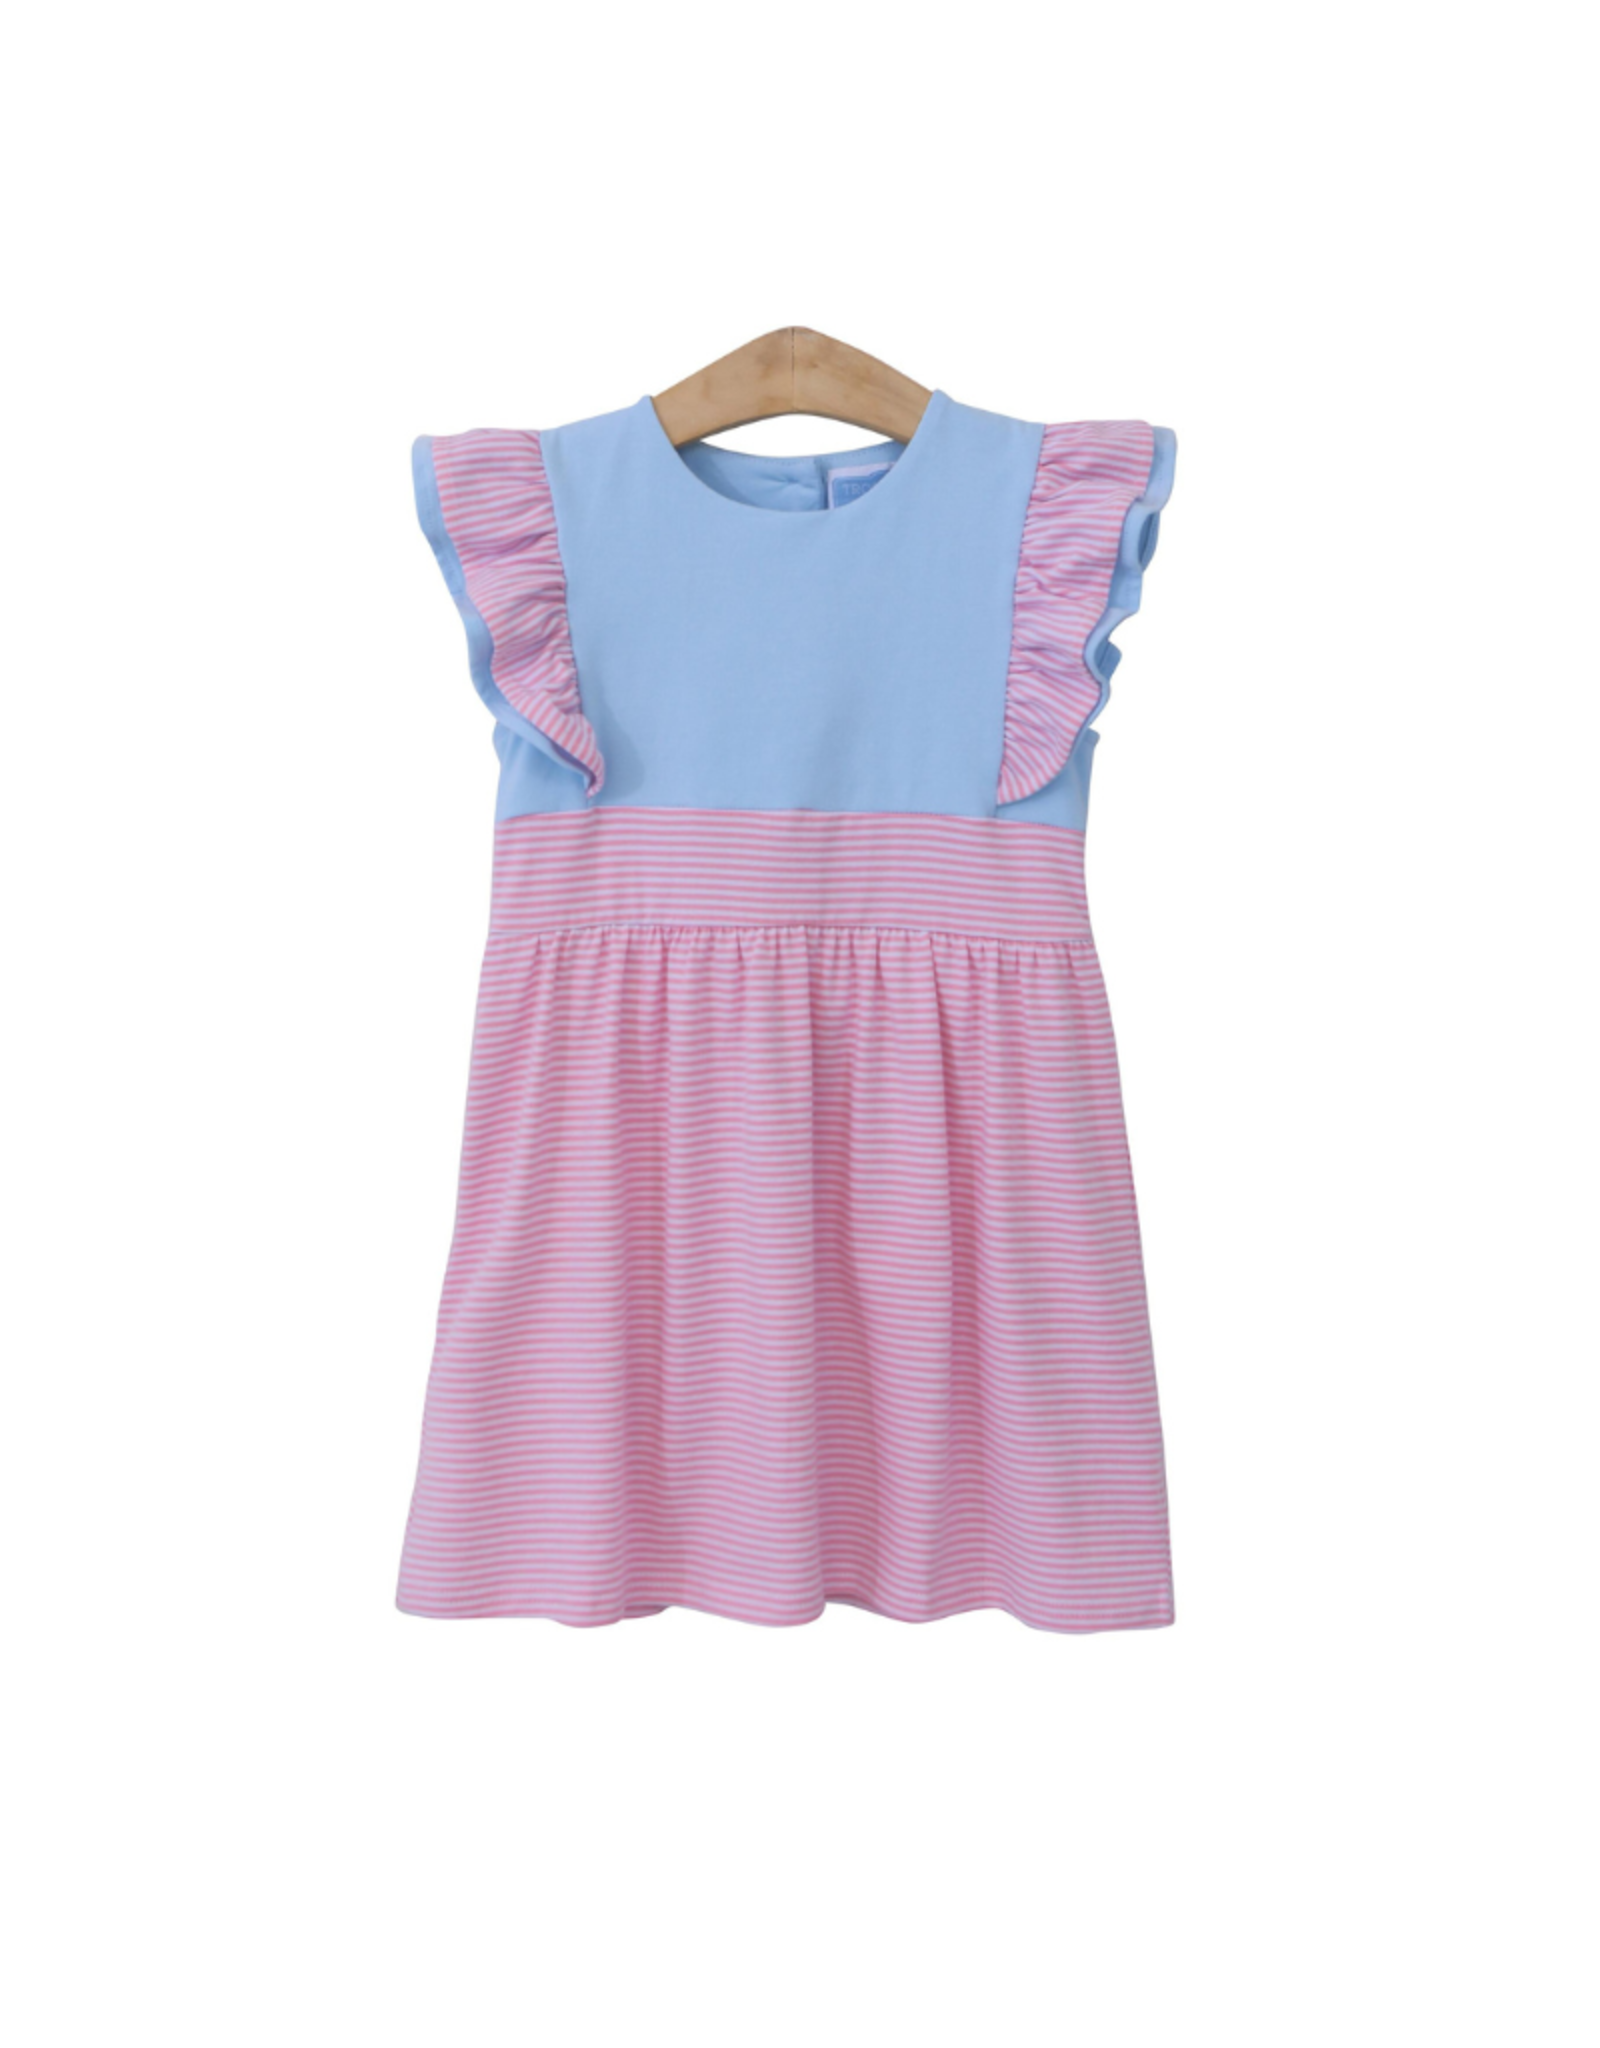 Trotter Street Kids Rosie Dress, Light Pink Stripe & Light Blue